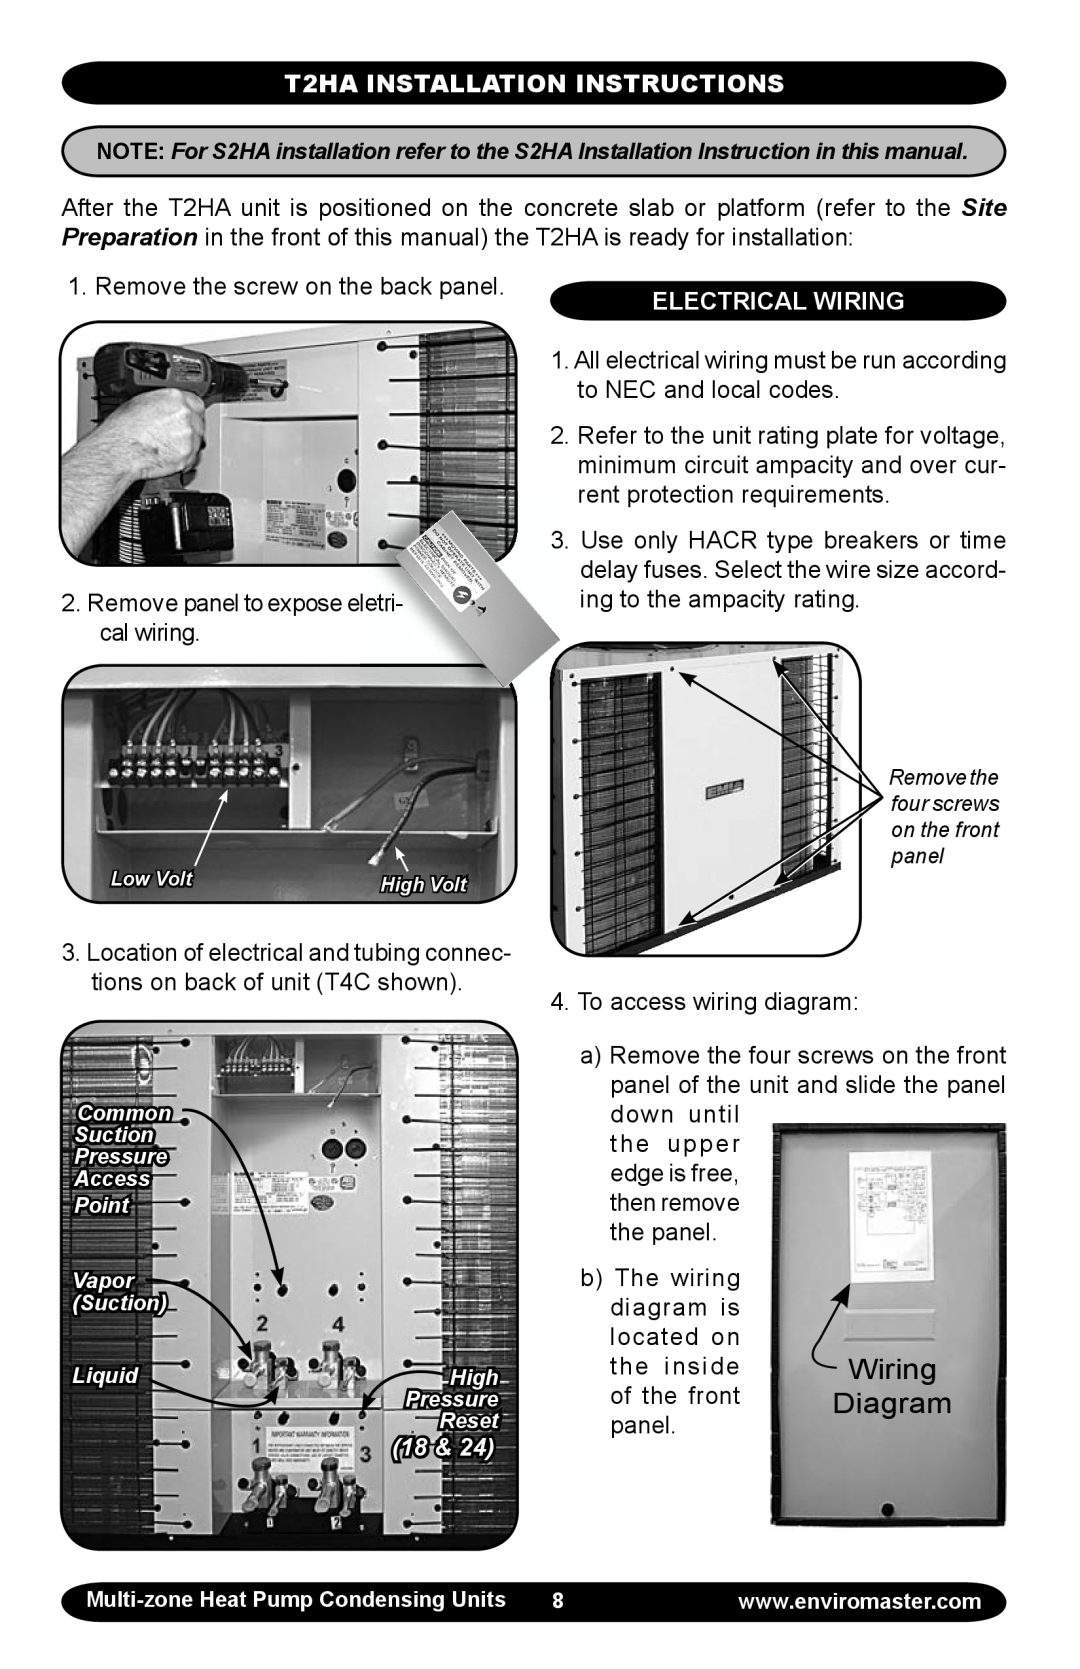 EMI S2HA manual T2HA INSTALLATION INSTRUCTIONS, Electrical Wiring, Diagram 